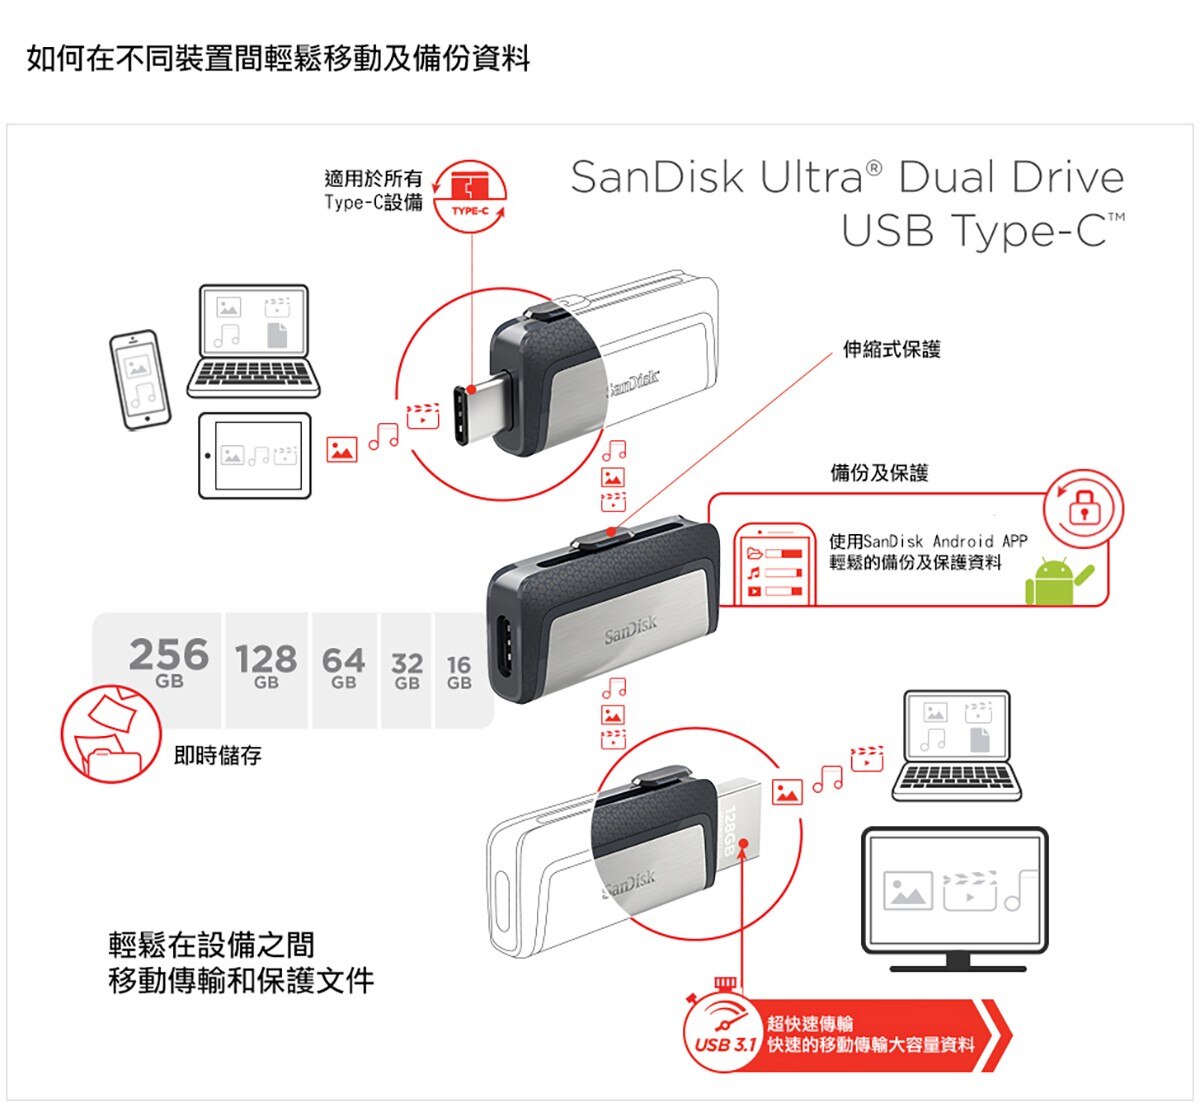 SanDisk Ultra Dual Drive USB Type-C,輕鬆在設備之間移動傳輸和保護文件,超快速傳輸,快速的移動傳輸大容量資料.